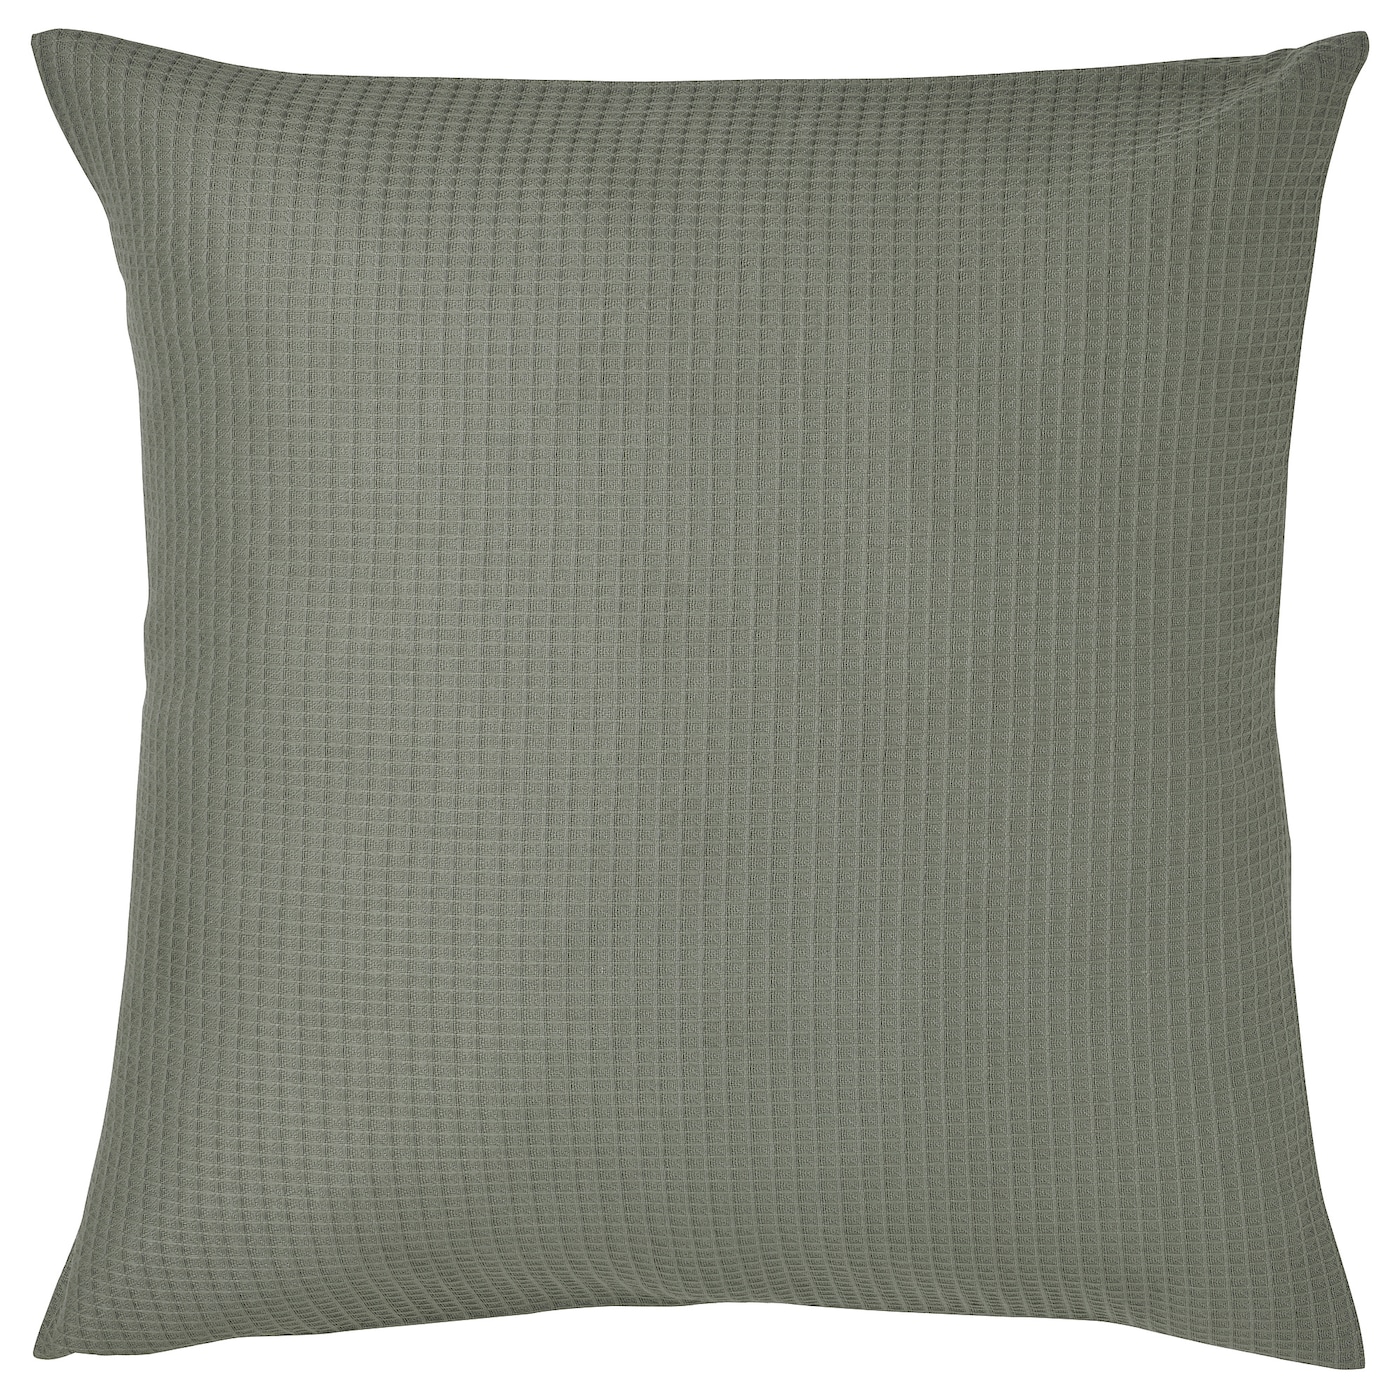 Чехол на подушку - EBBATILDA IKEA/ЭББАТИЛЬДА ИКЕА, 50x50 см,  темно-зеленый